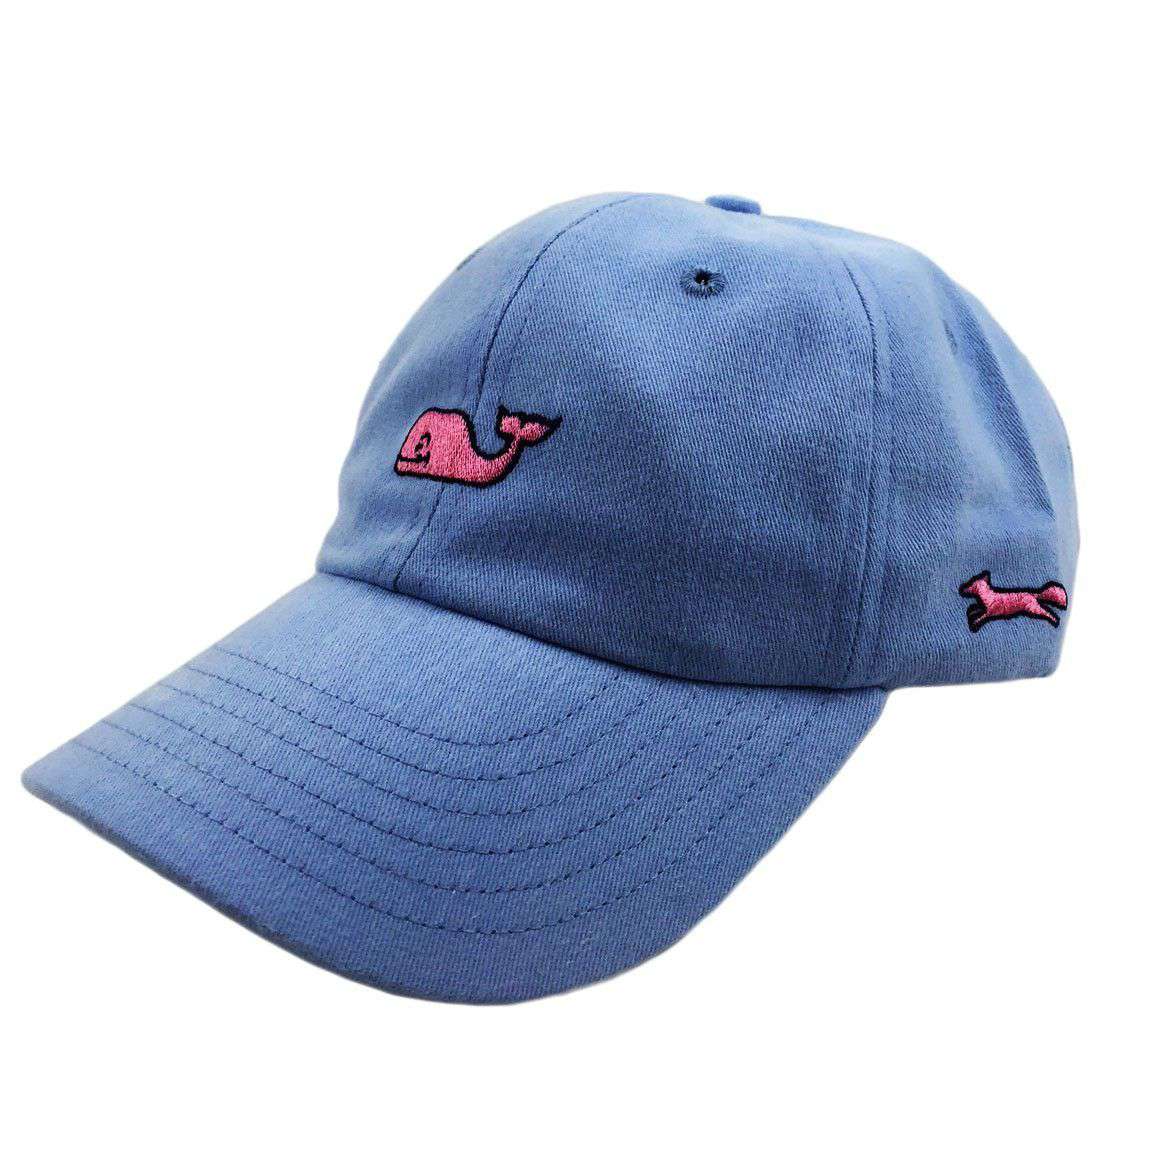 Vineyard Vines Whale Logo Baseball Hat in Light Blue w/ Pink